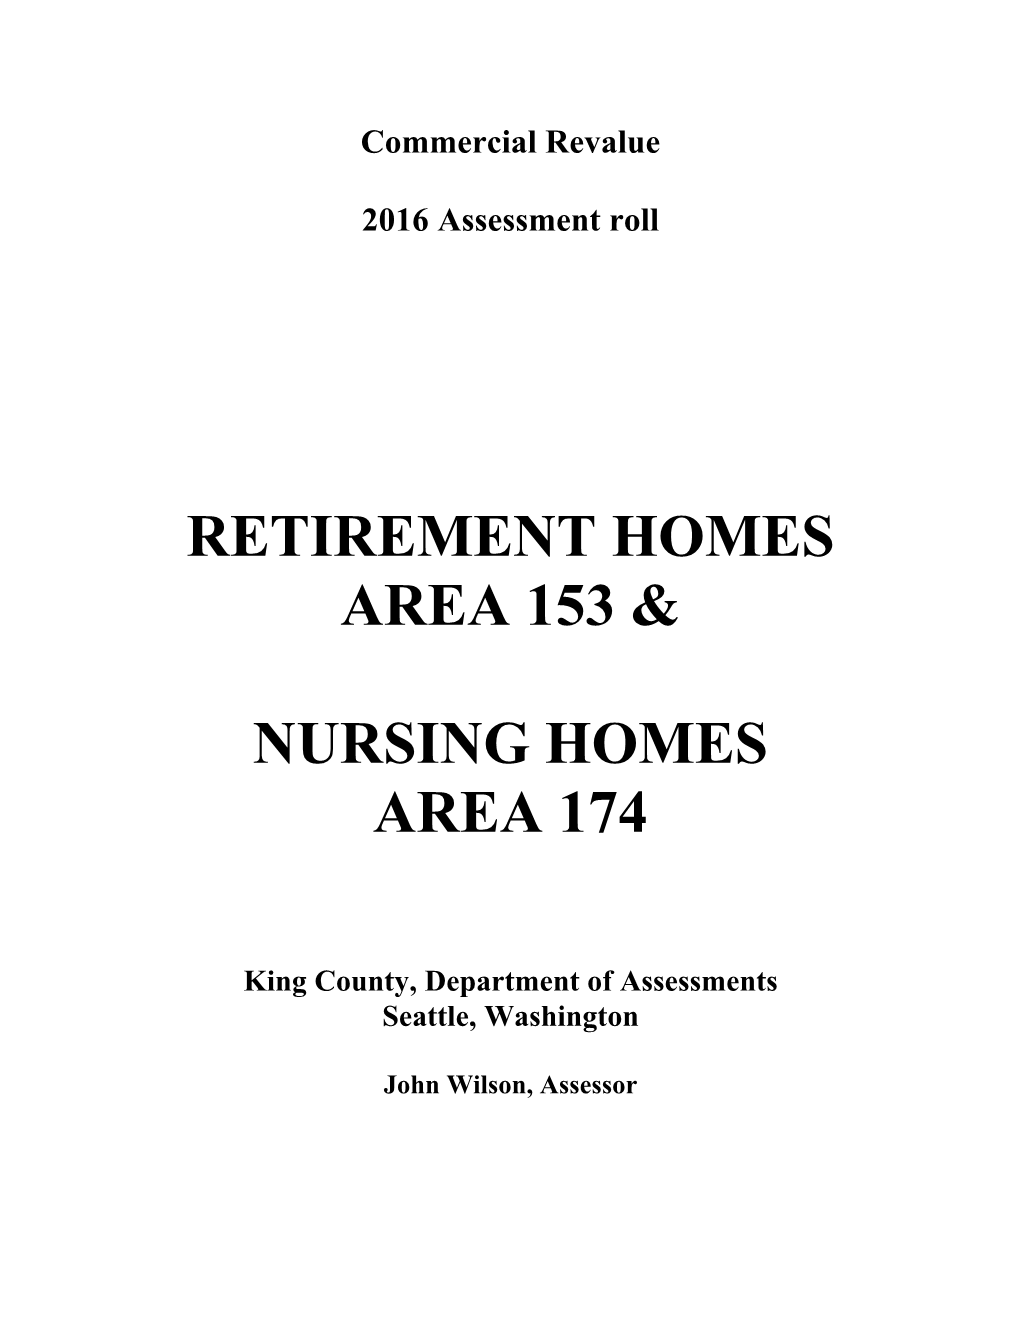 Nursing Homes Area 174